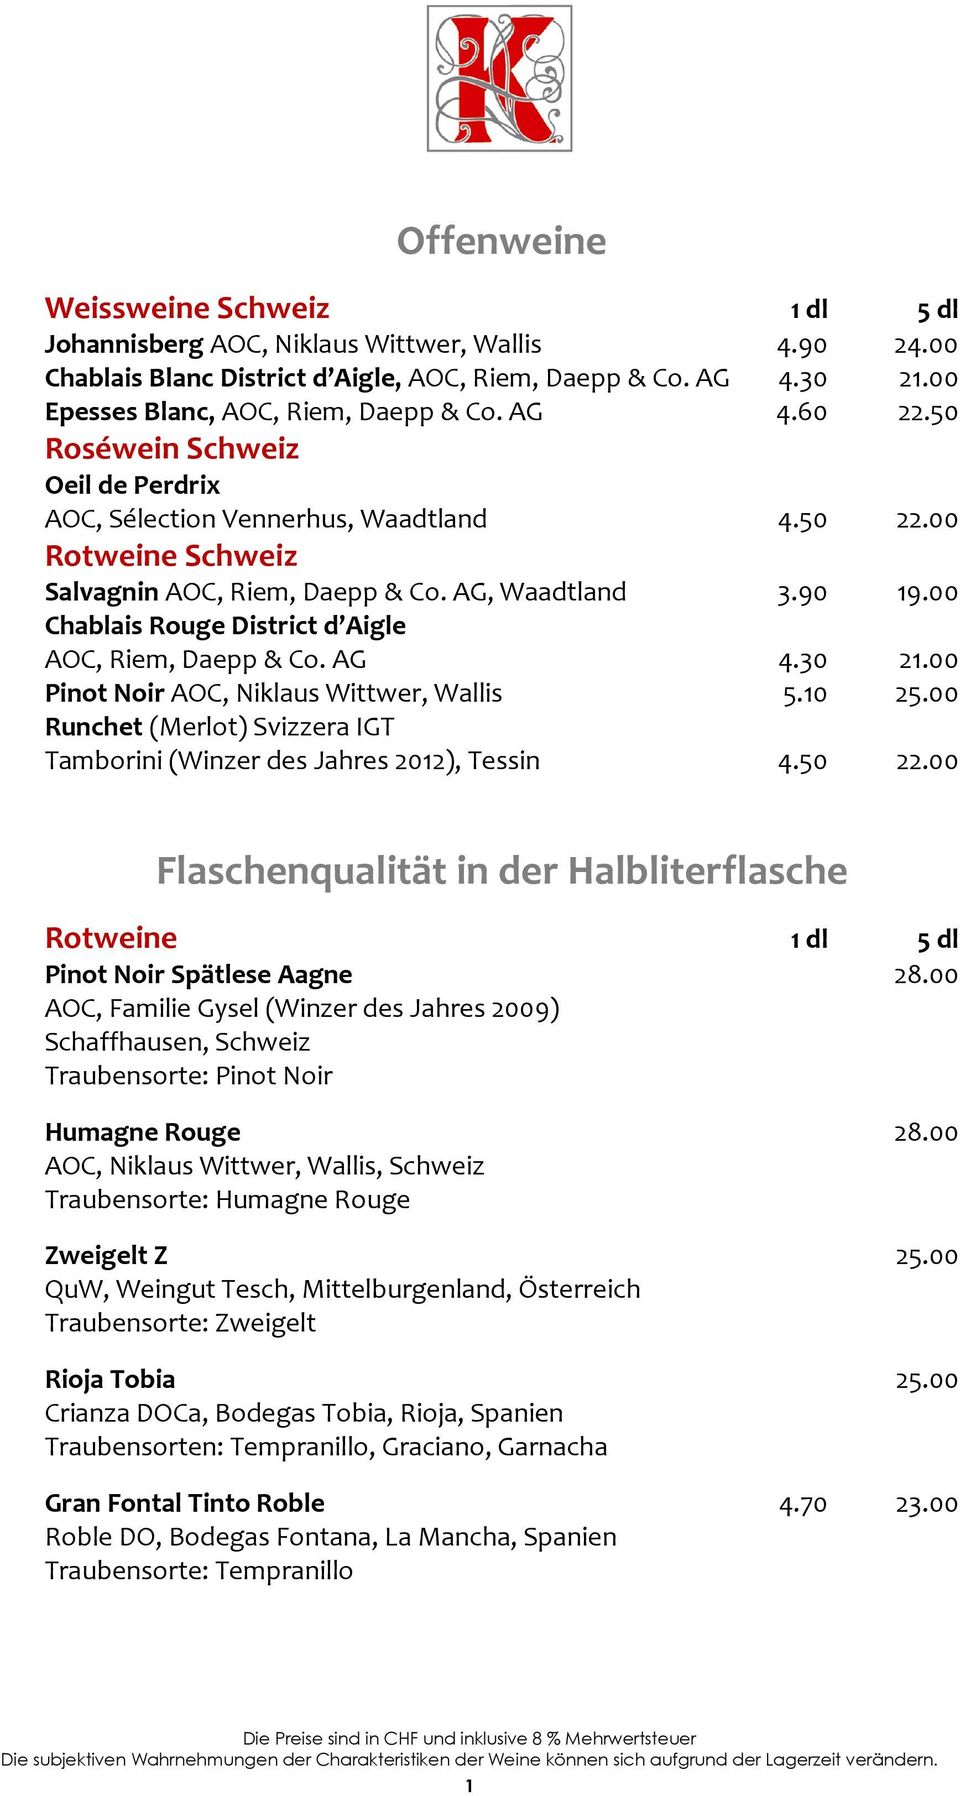 00 Chablais Rouge District d Aigle AOC, Riem, Daepp & Co. AG 4.30 21.00 Pinot Noir AOC, Niklaus Wittwer, Wallis 5.10 25.00 Runchet (Merlot) Svizzera IGT Tamborini (Winzer des Jahres 2012), Tessin 4.